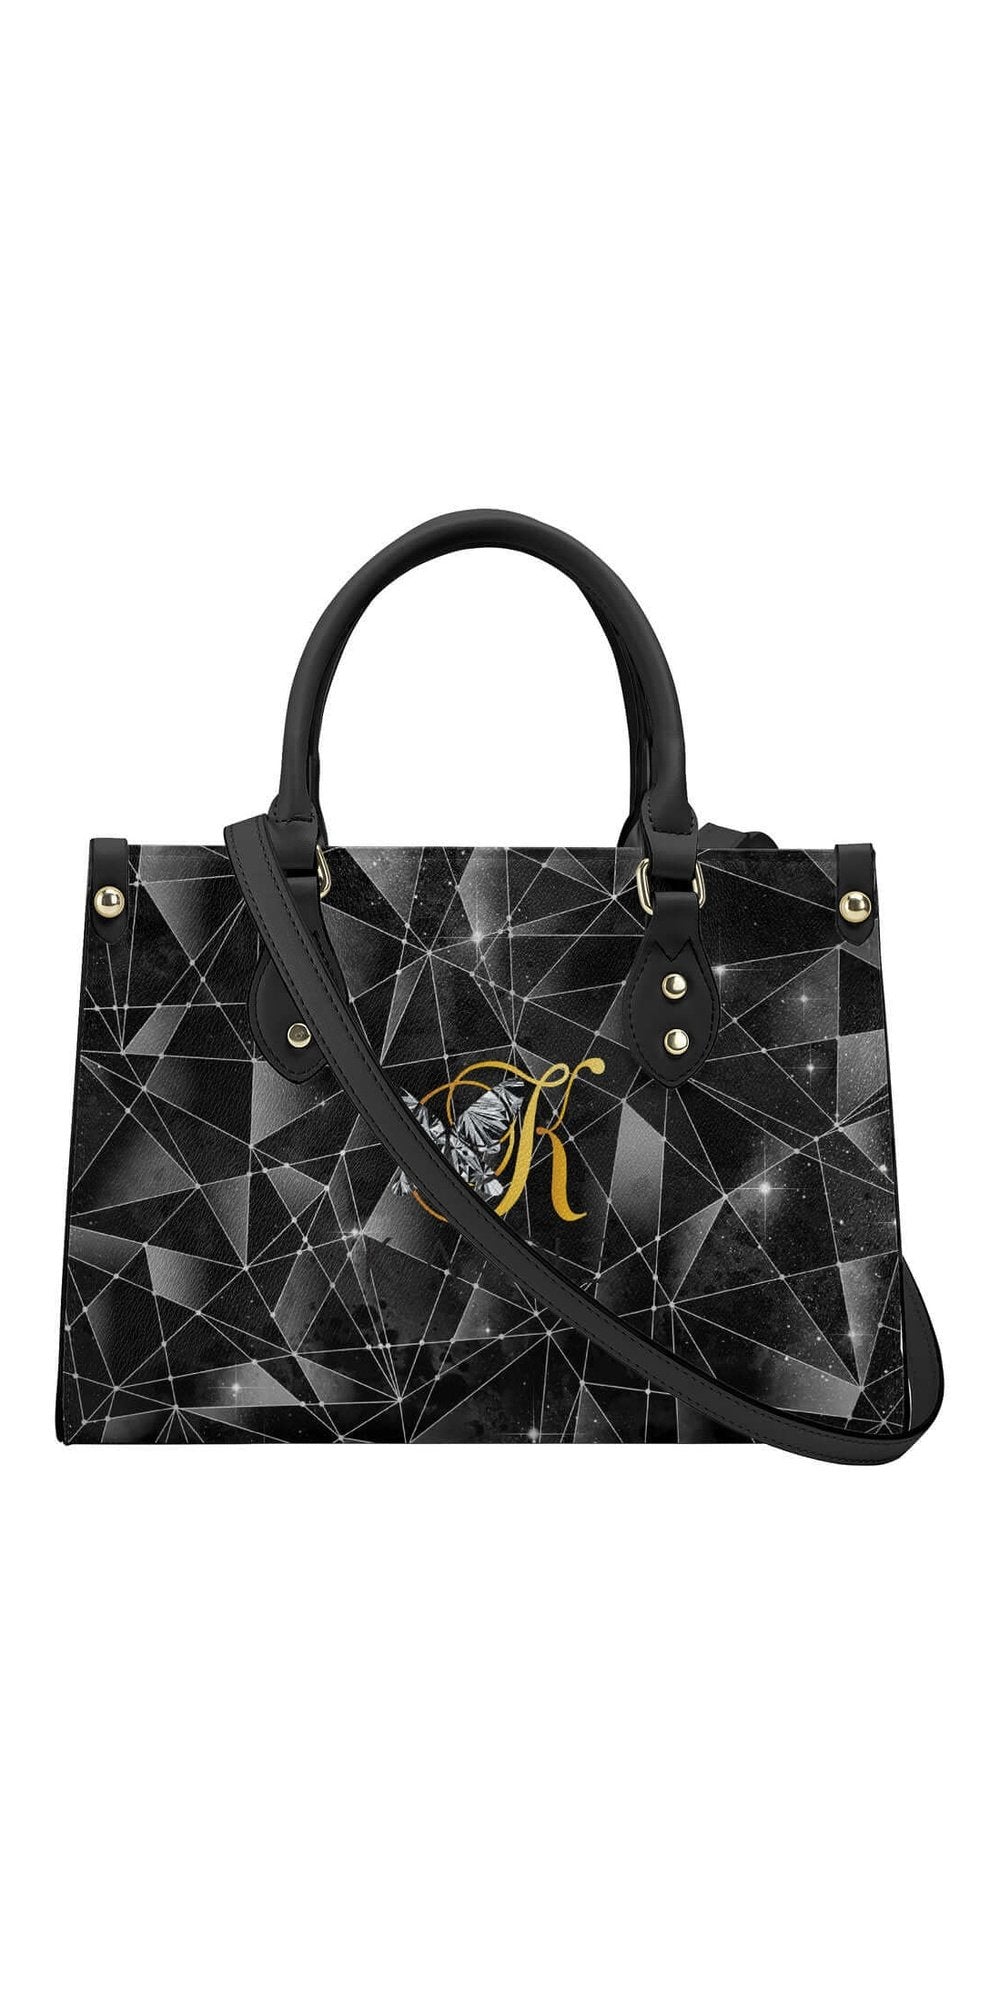 "Diamond Elegance: Elevate Your Style with Our Geometric Black Handbag"